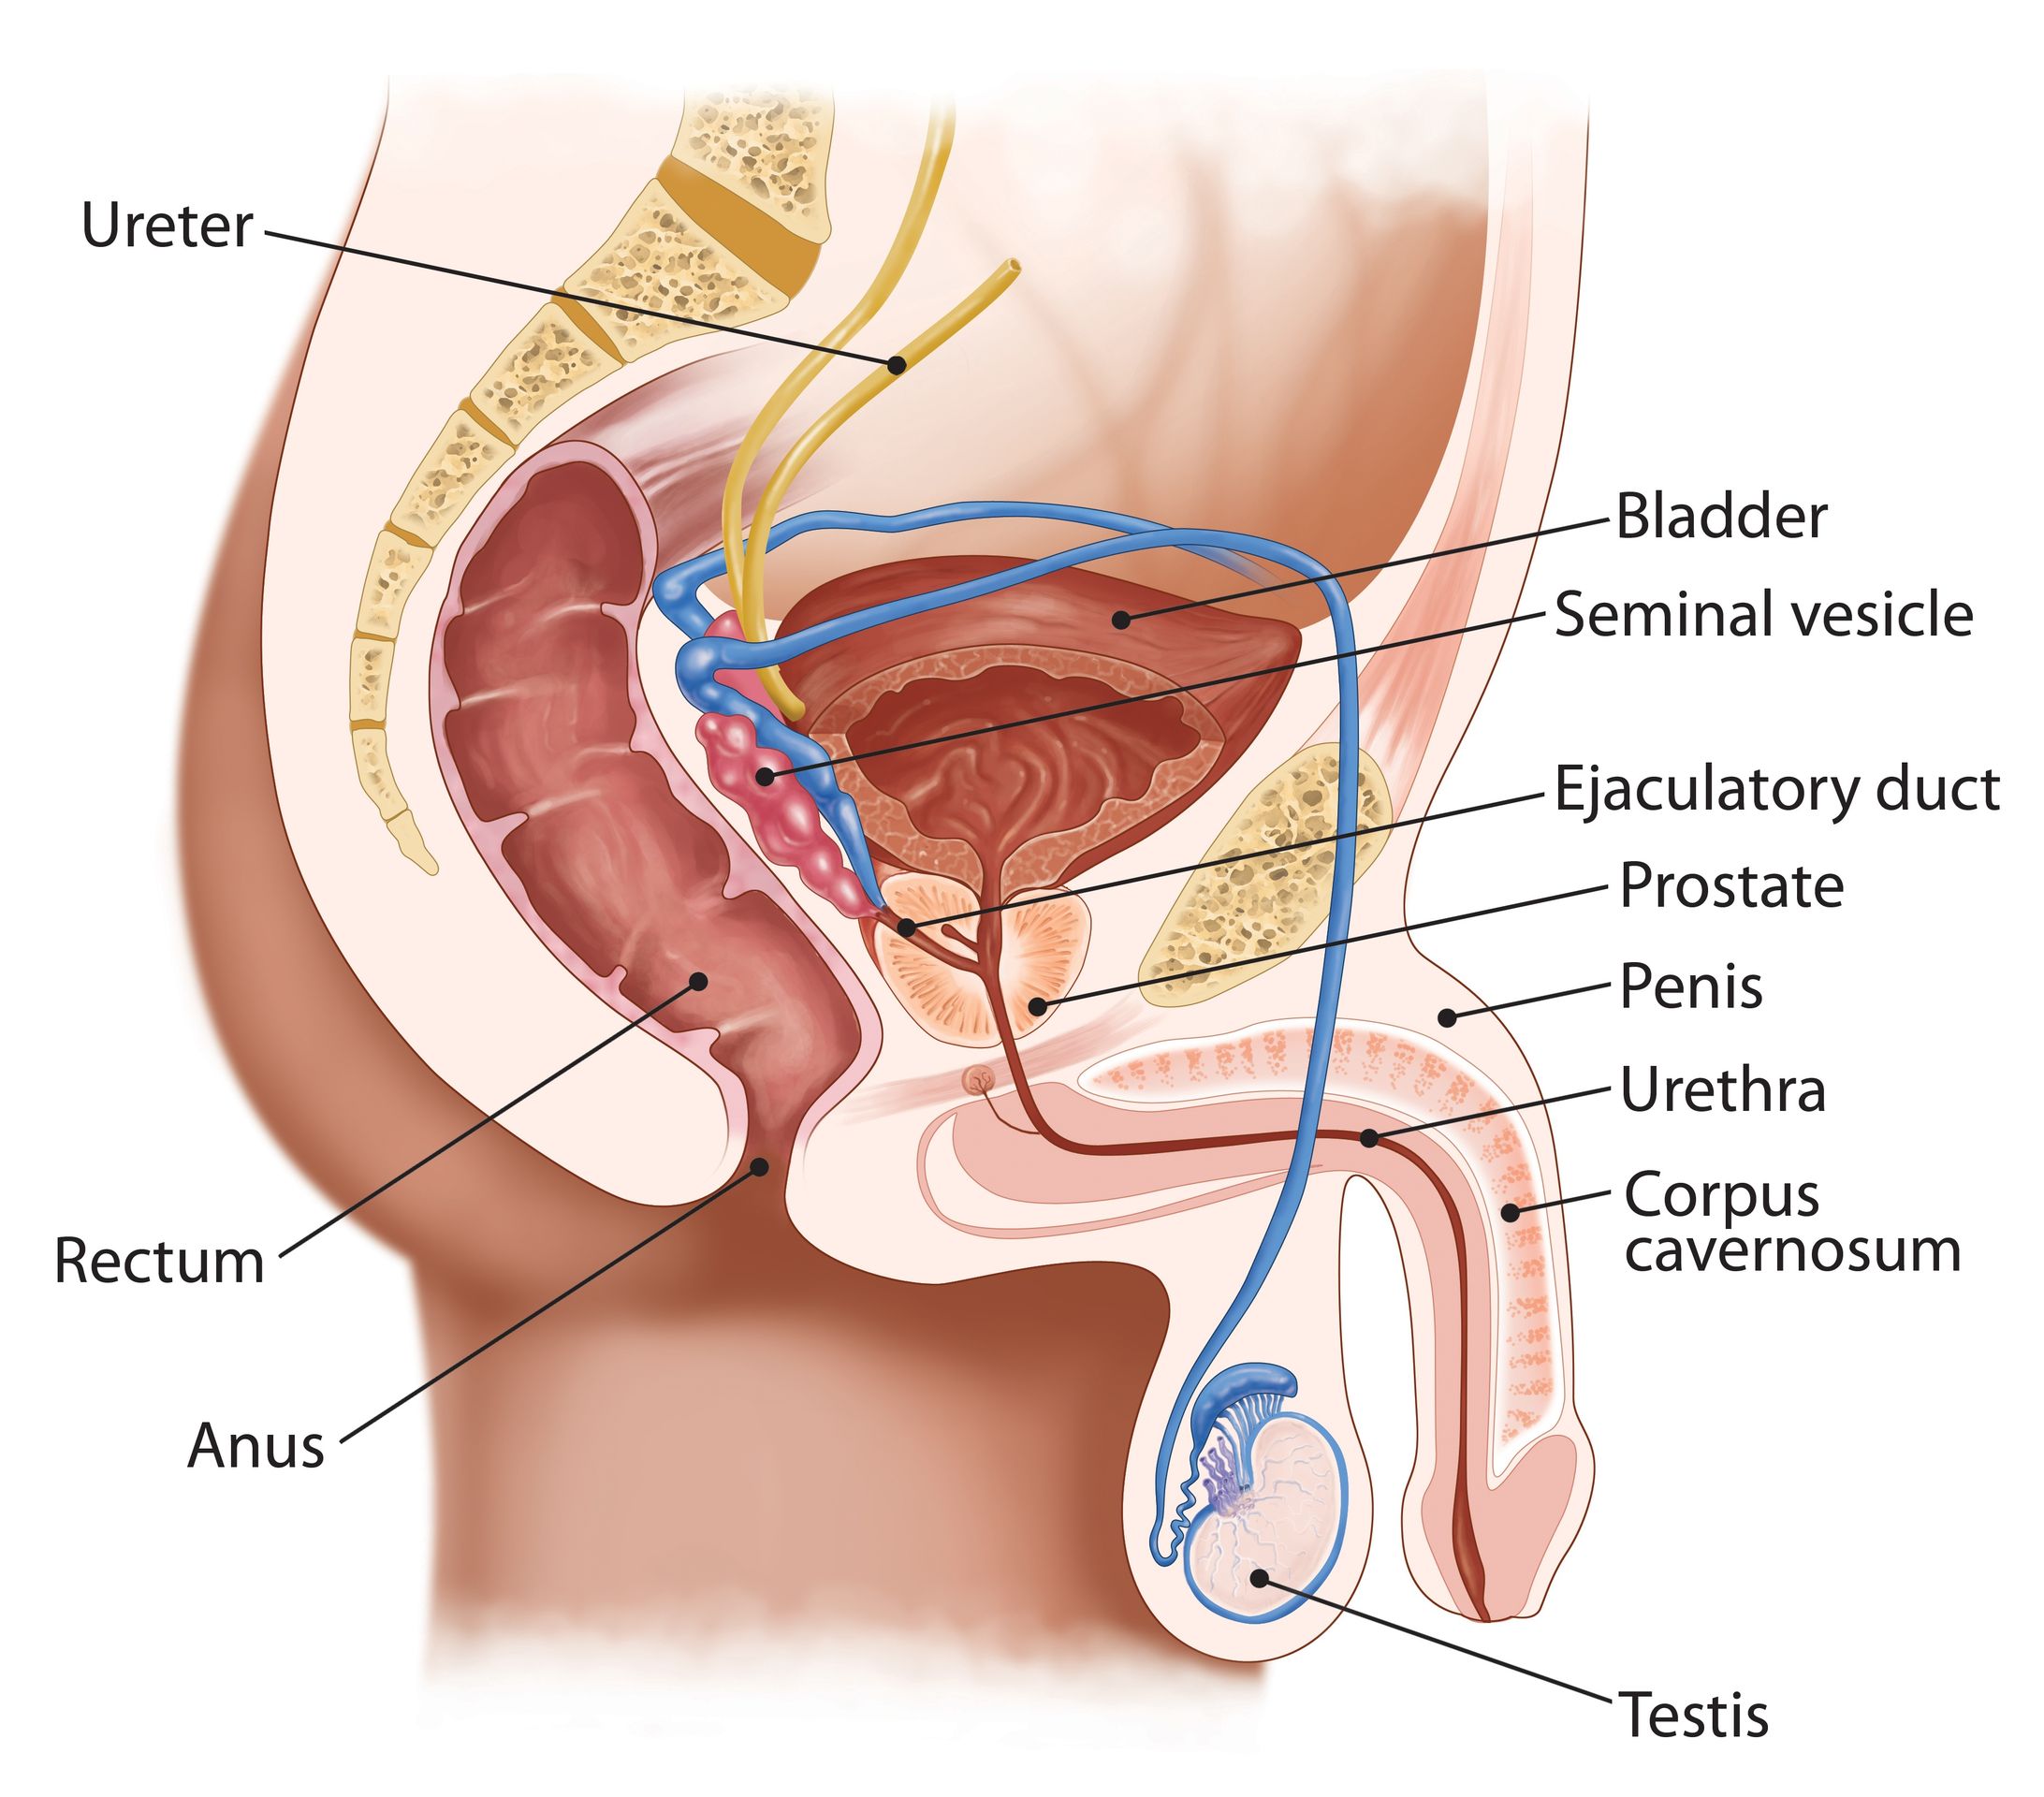 Prostate Gland Enlargement. Causes, symptoms, treatment ...